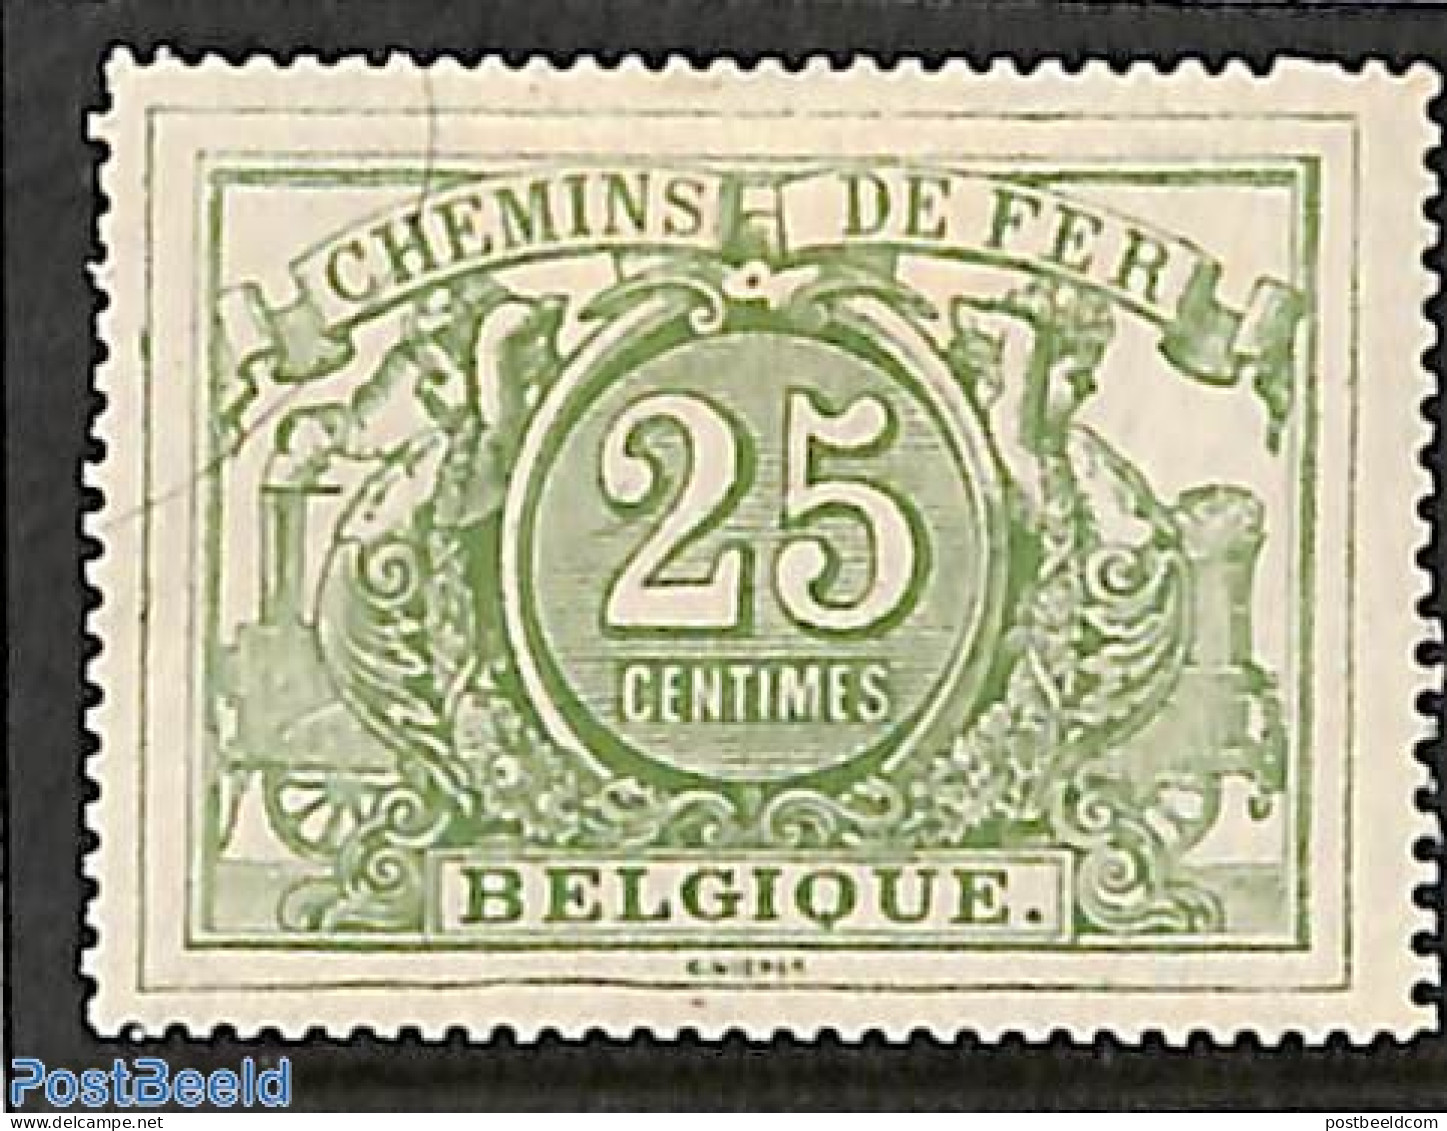 Belgium 1882 25c, Railway Stamp, Stamp Out Of Set, Unused (hinged) - Nuevos